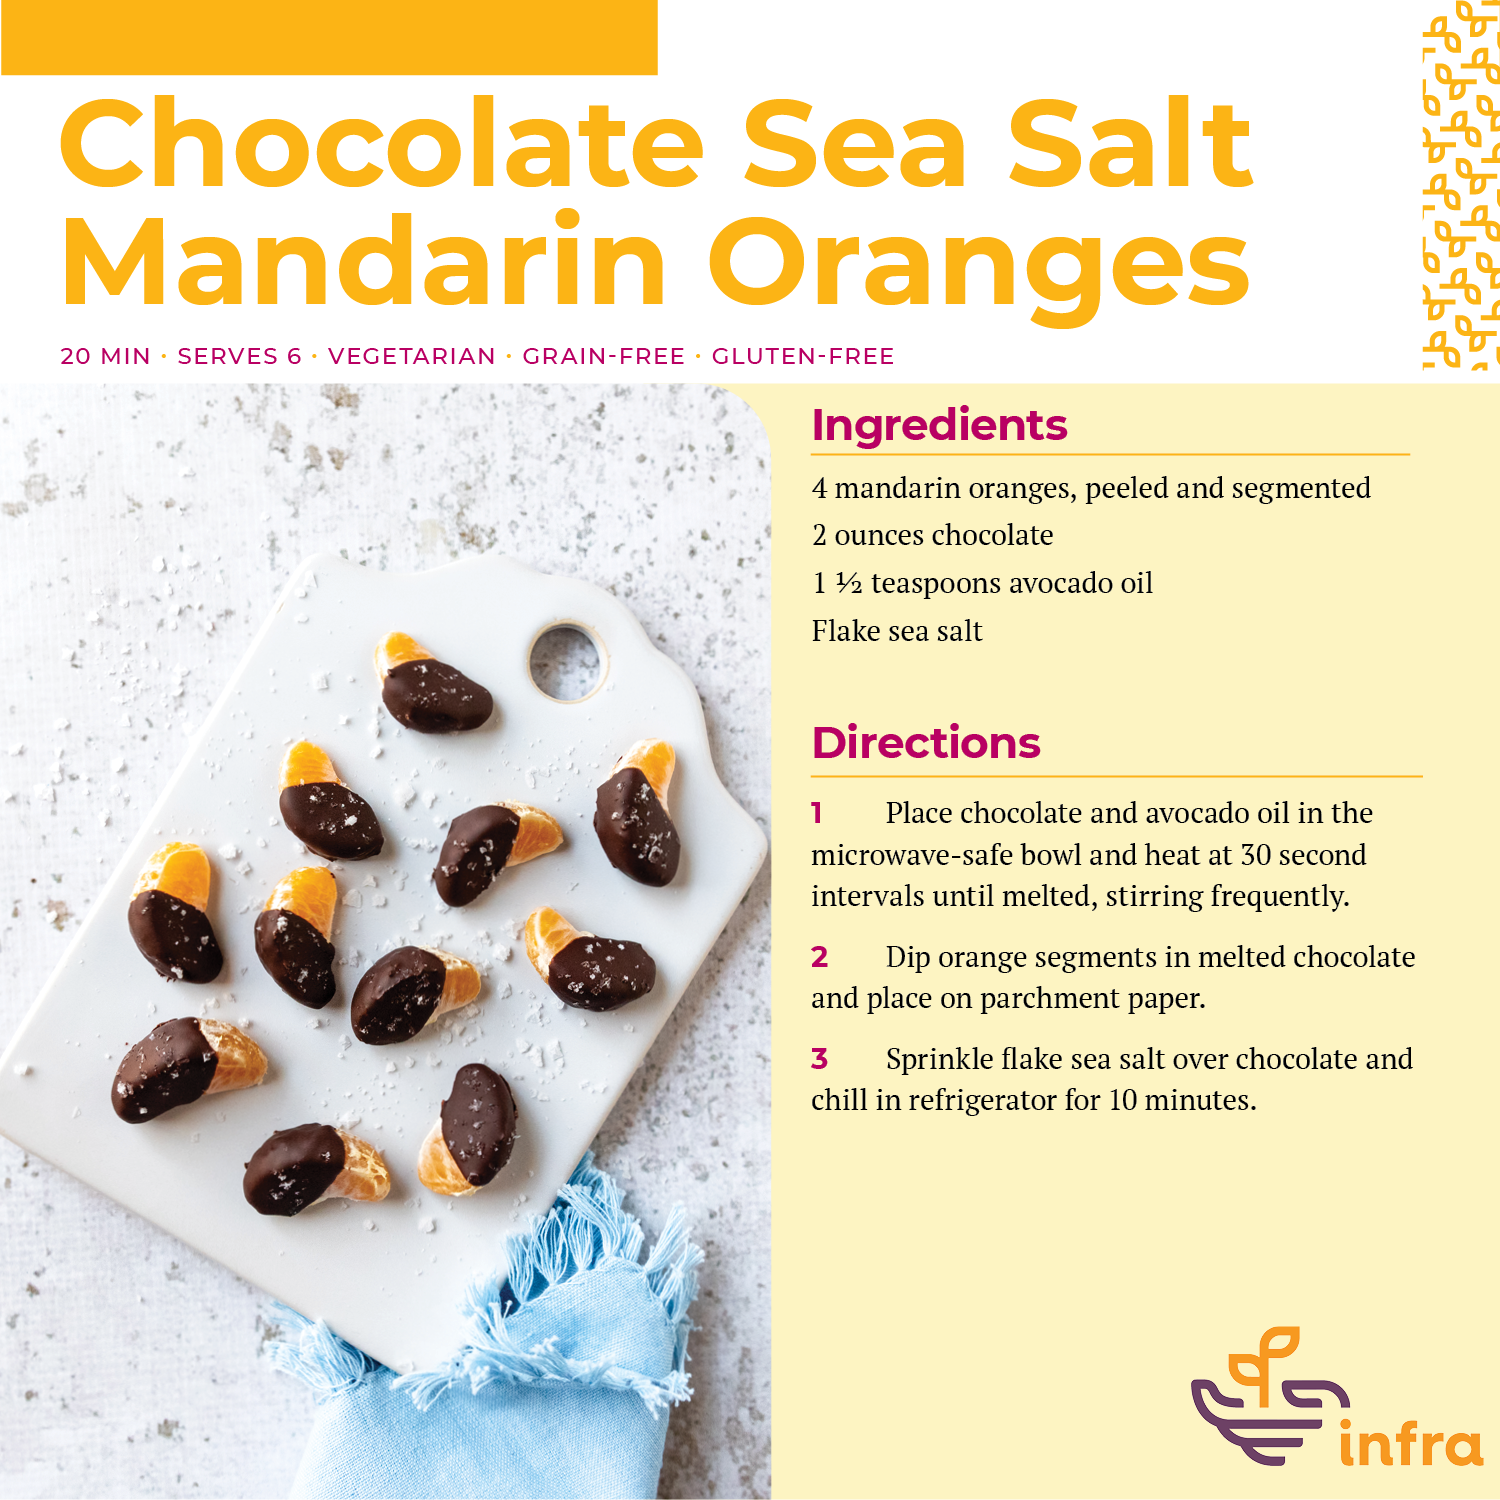 Chocolate Sea Salt Mandarin Oranges Image and Recipe.png